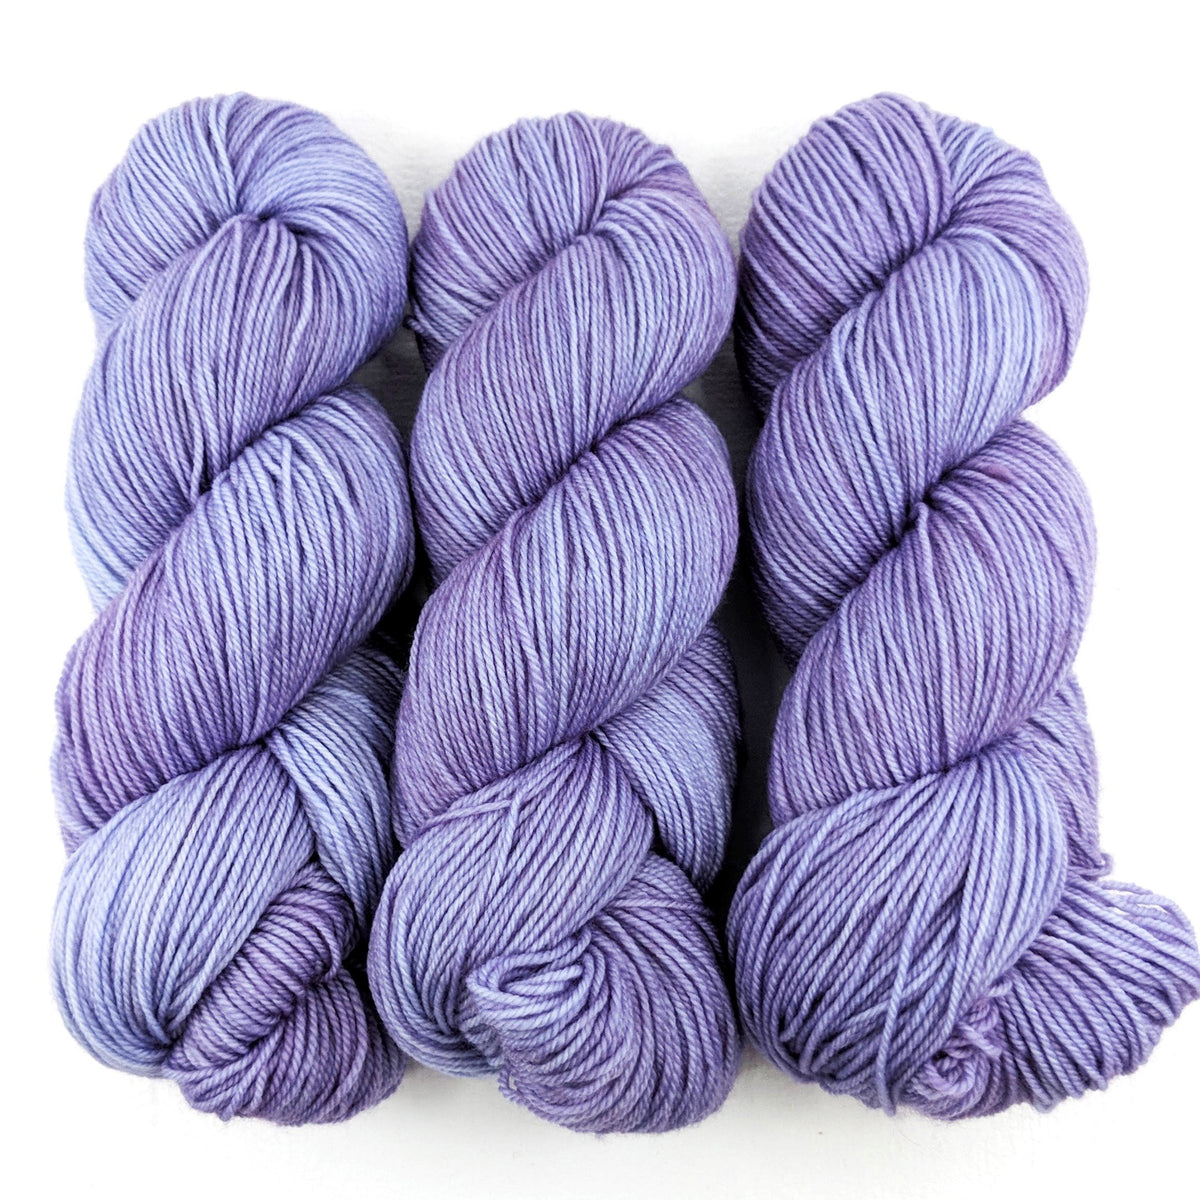 English Lavender - Socknado Fingering - Dyed Stock